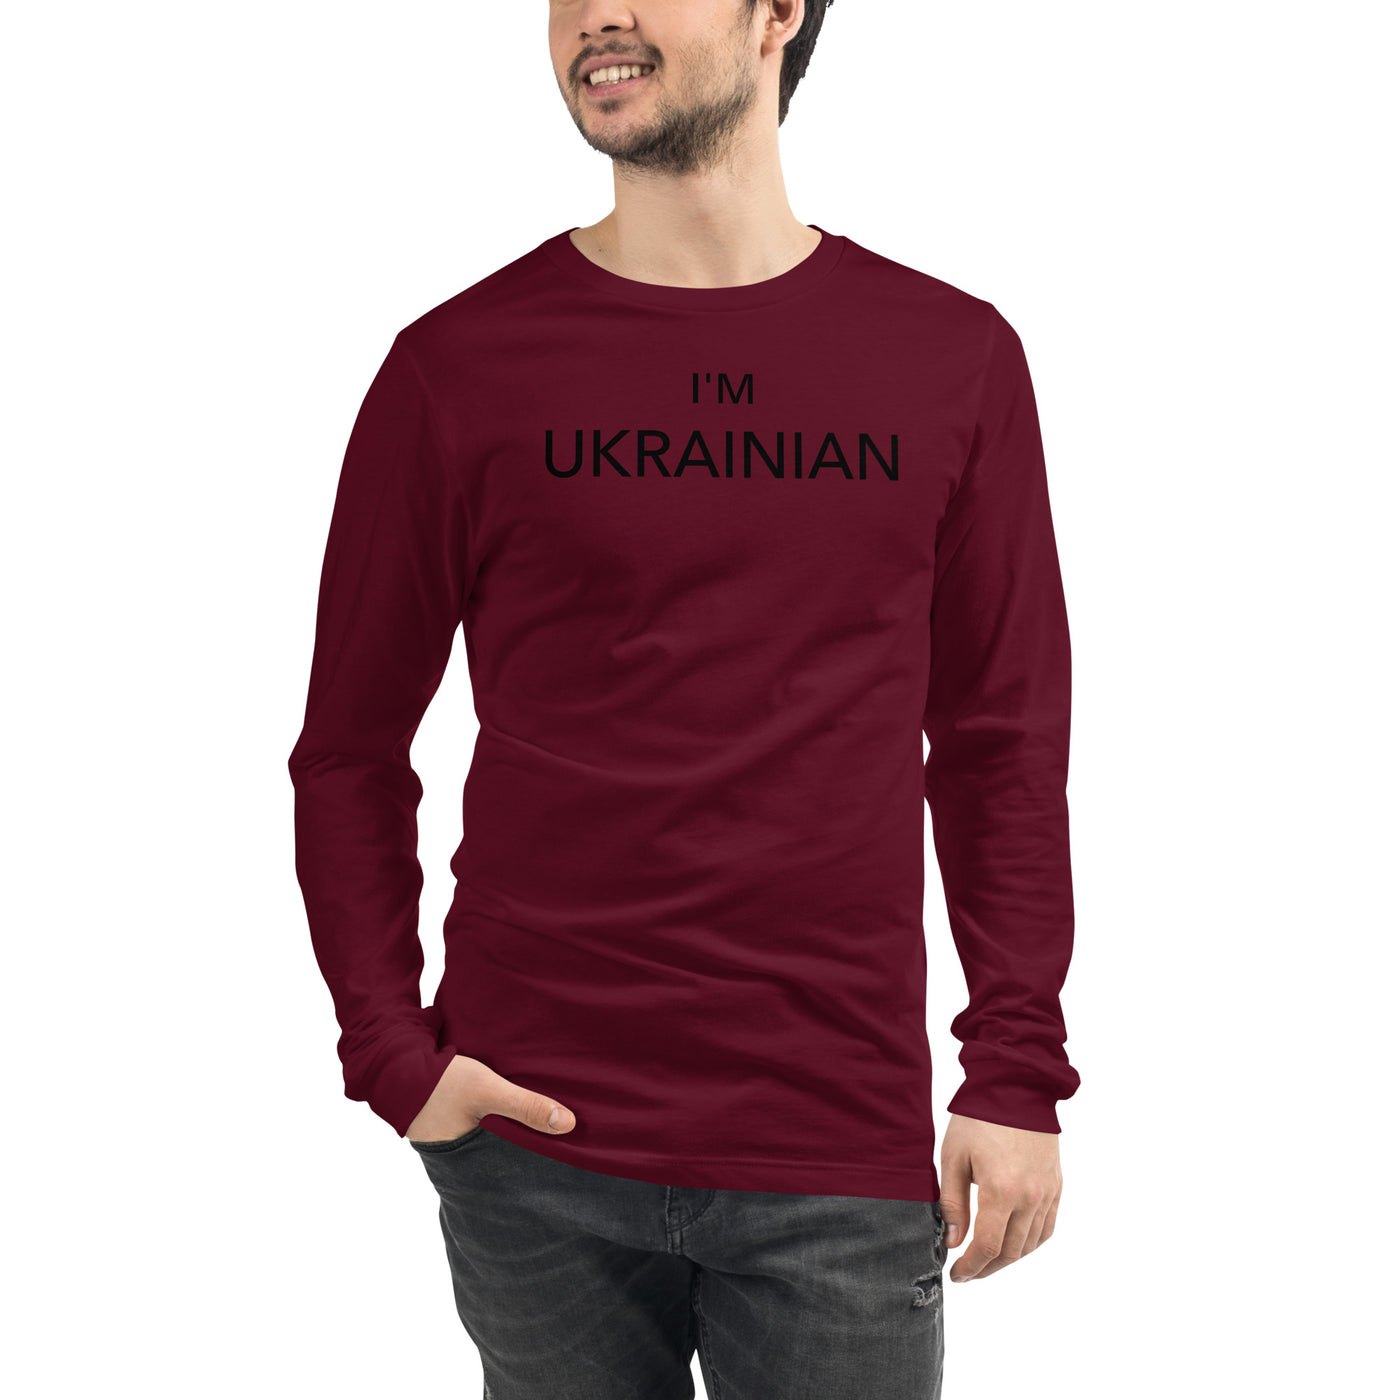 I'M UKRAINIAN Long Sleeve Shirt Print